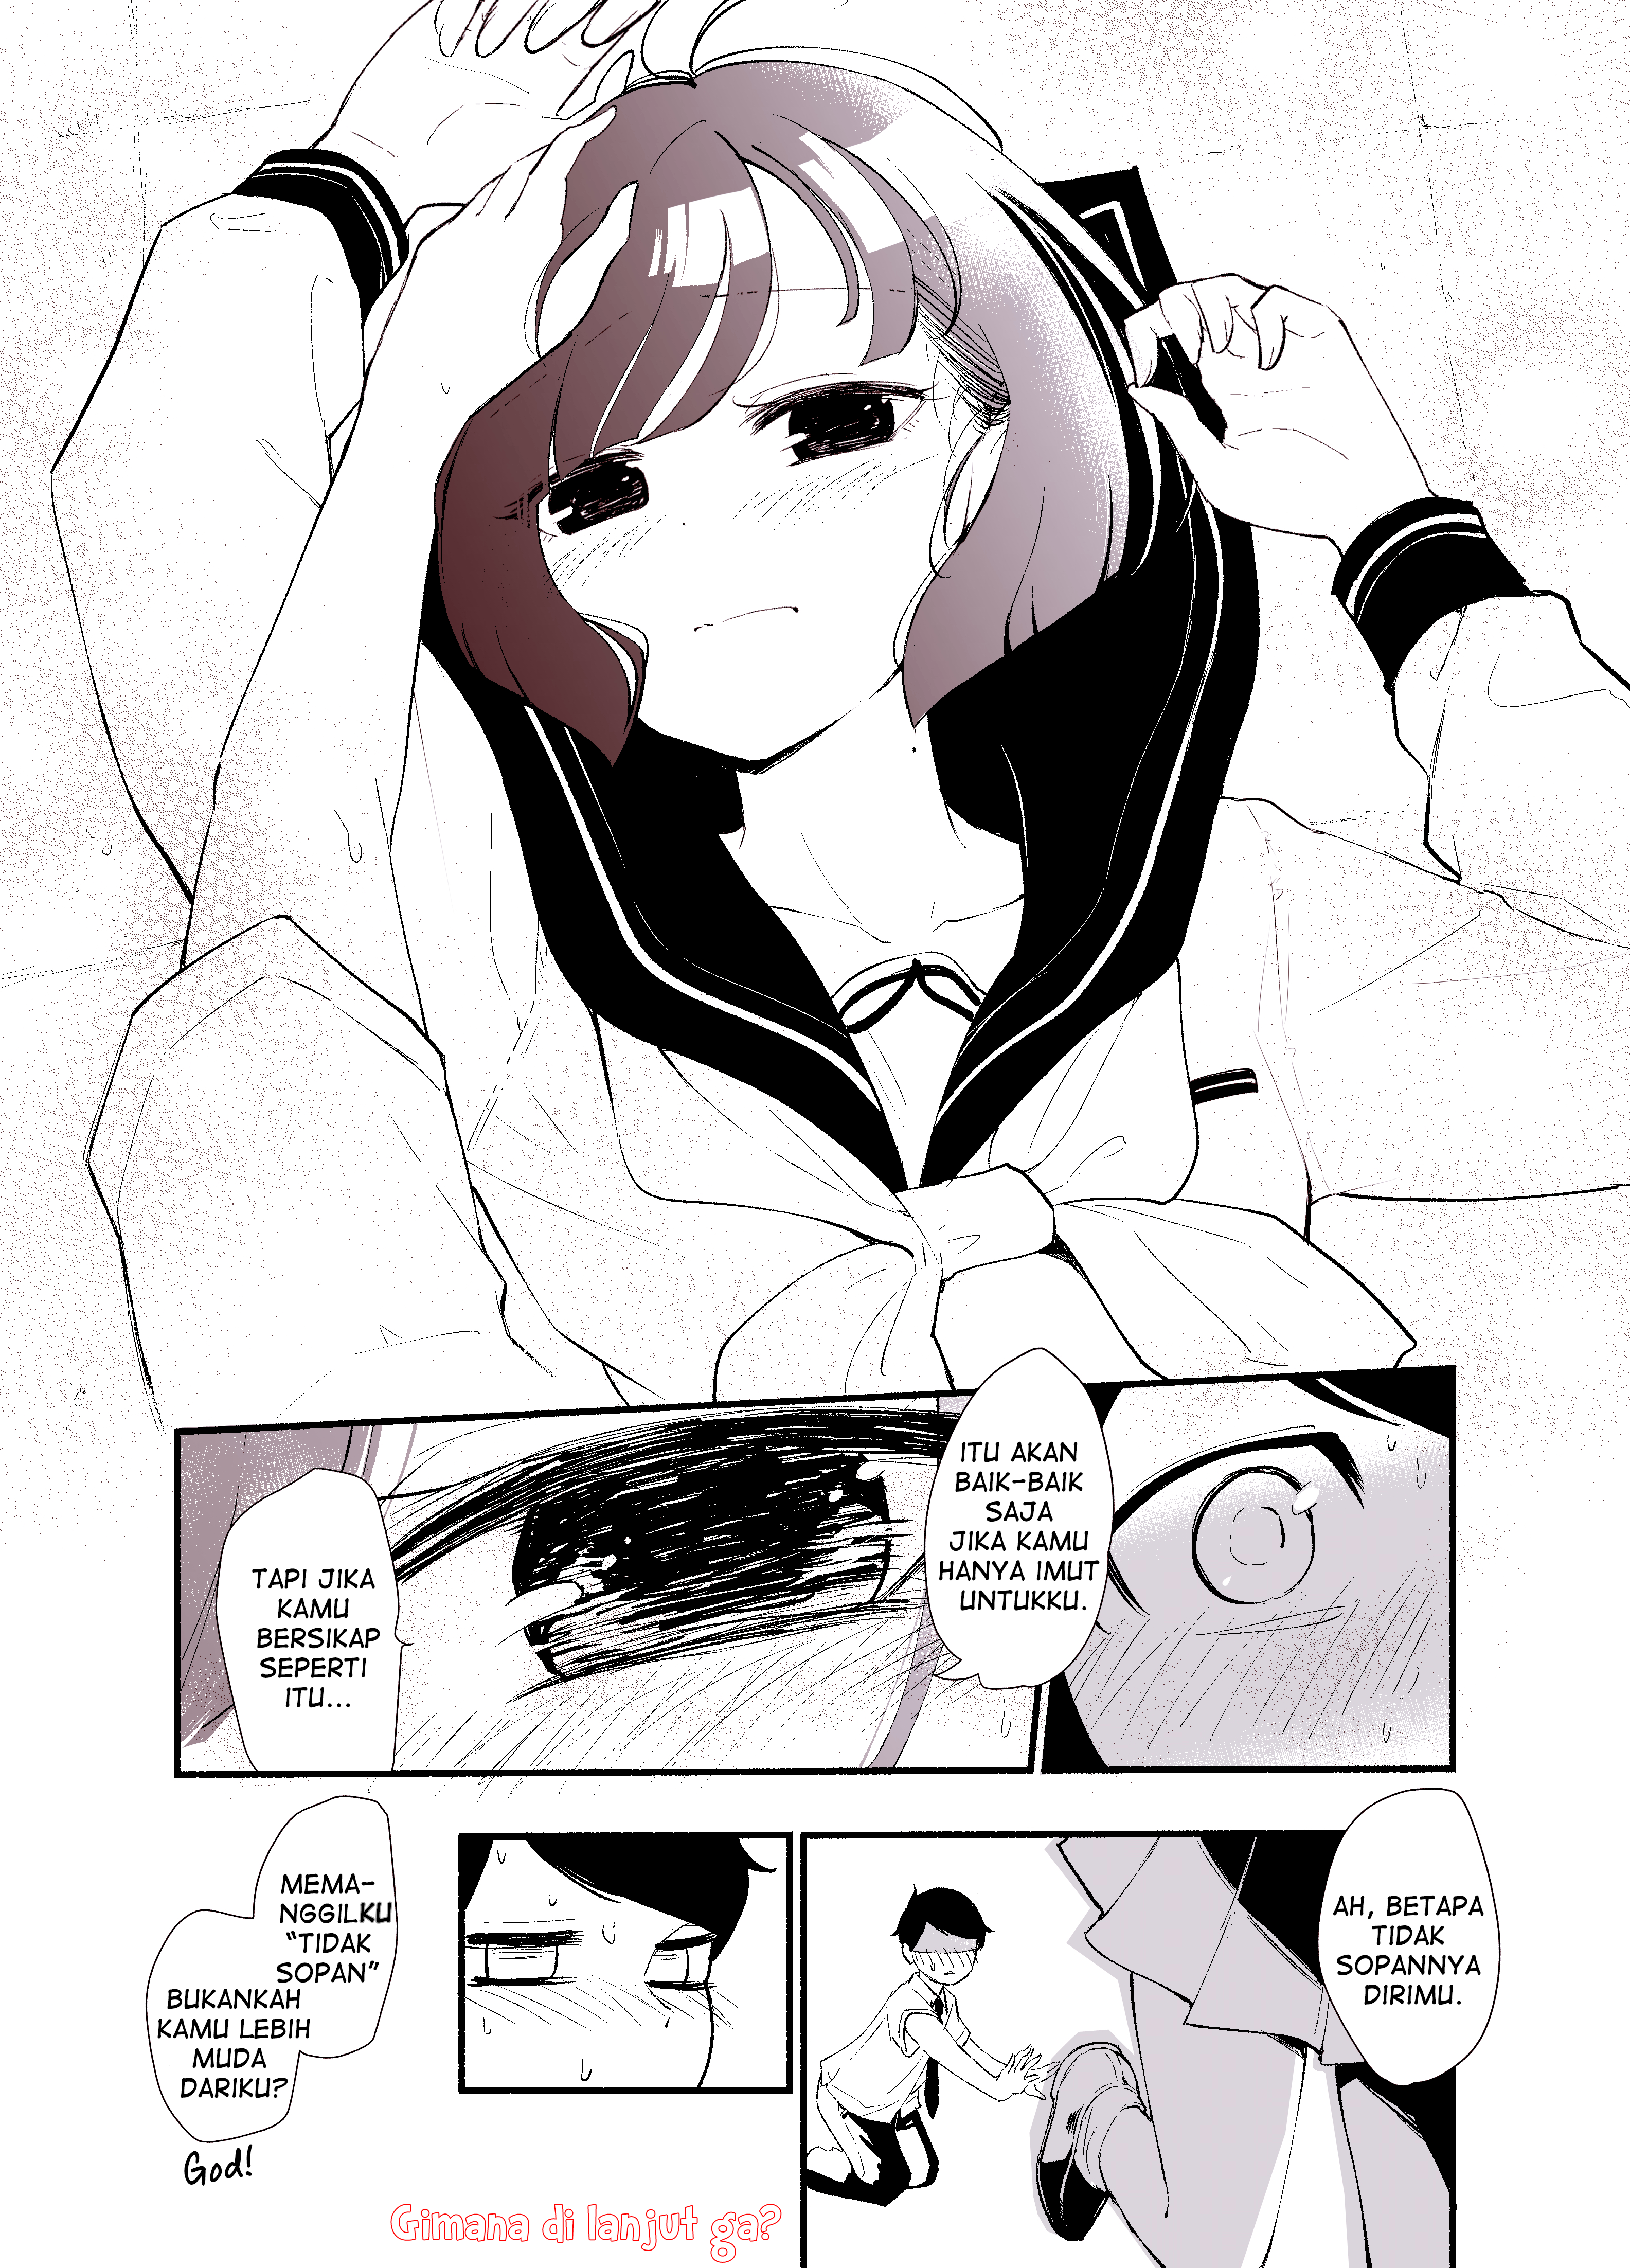 Spoiler Manga Until The Tall Kouhai (Girl) and the Short Senpai (Boy) Develops a Romance. 3